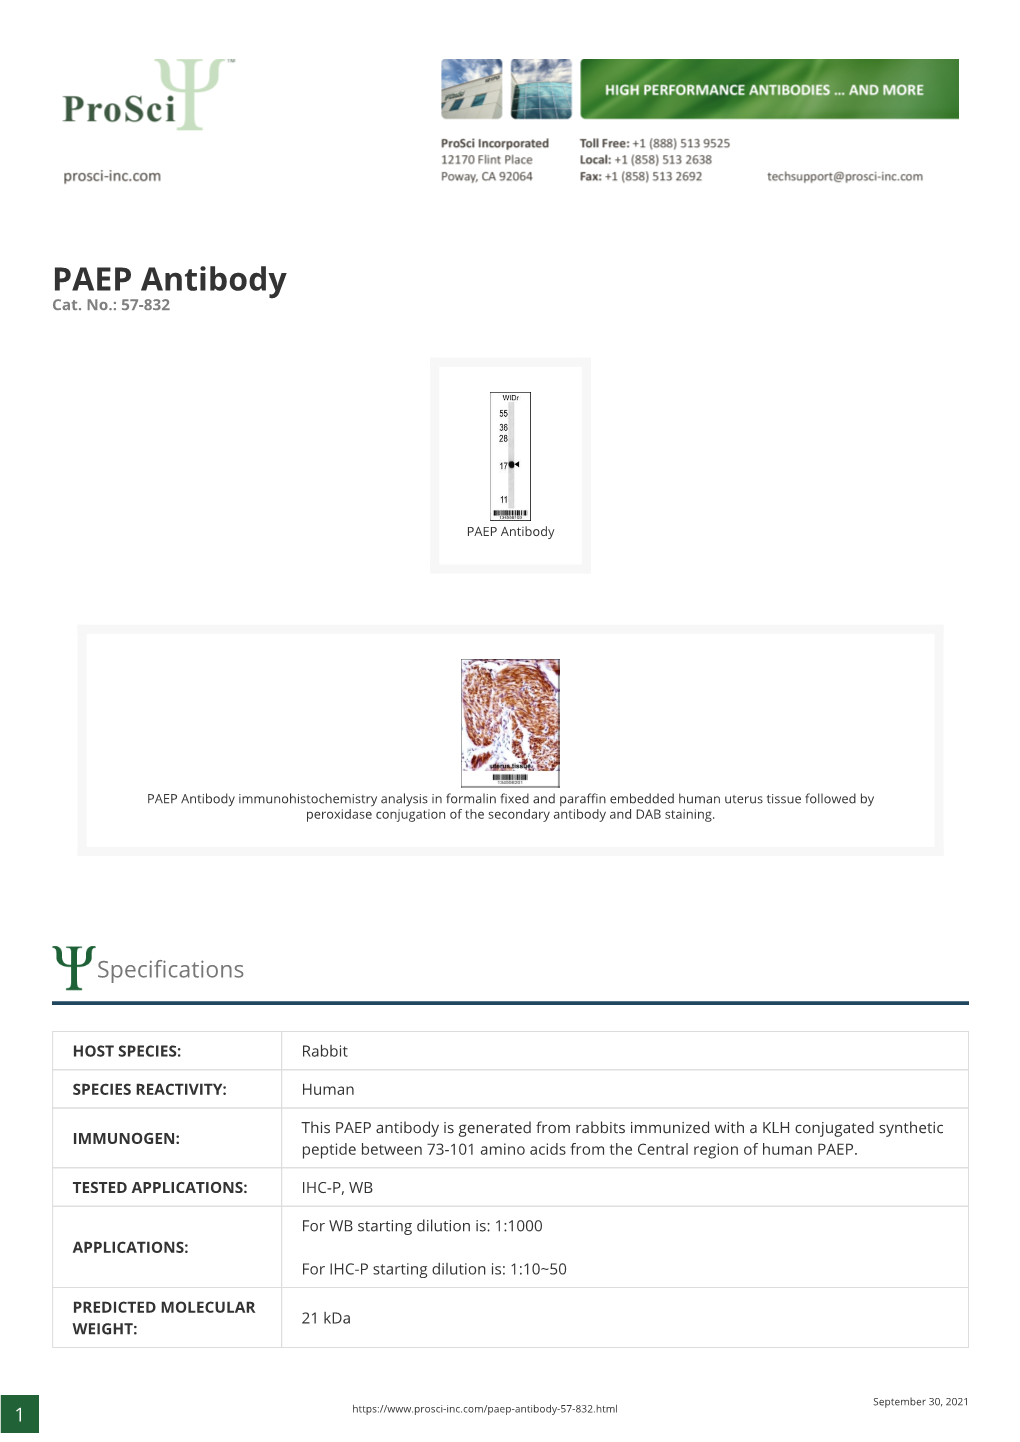 PAEP Antibody Cat